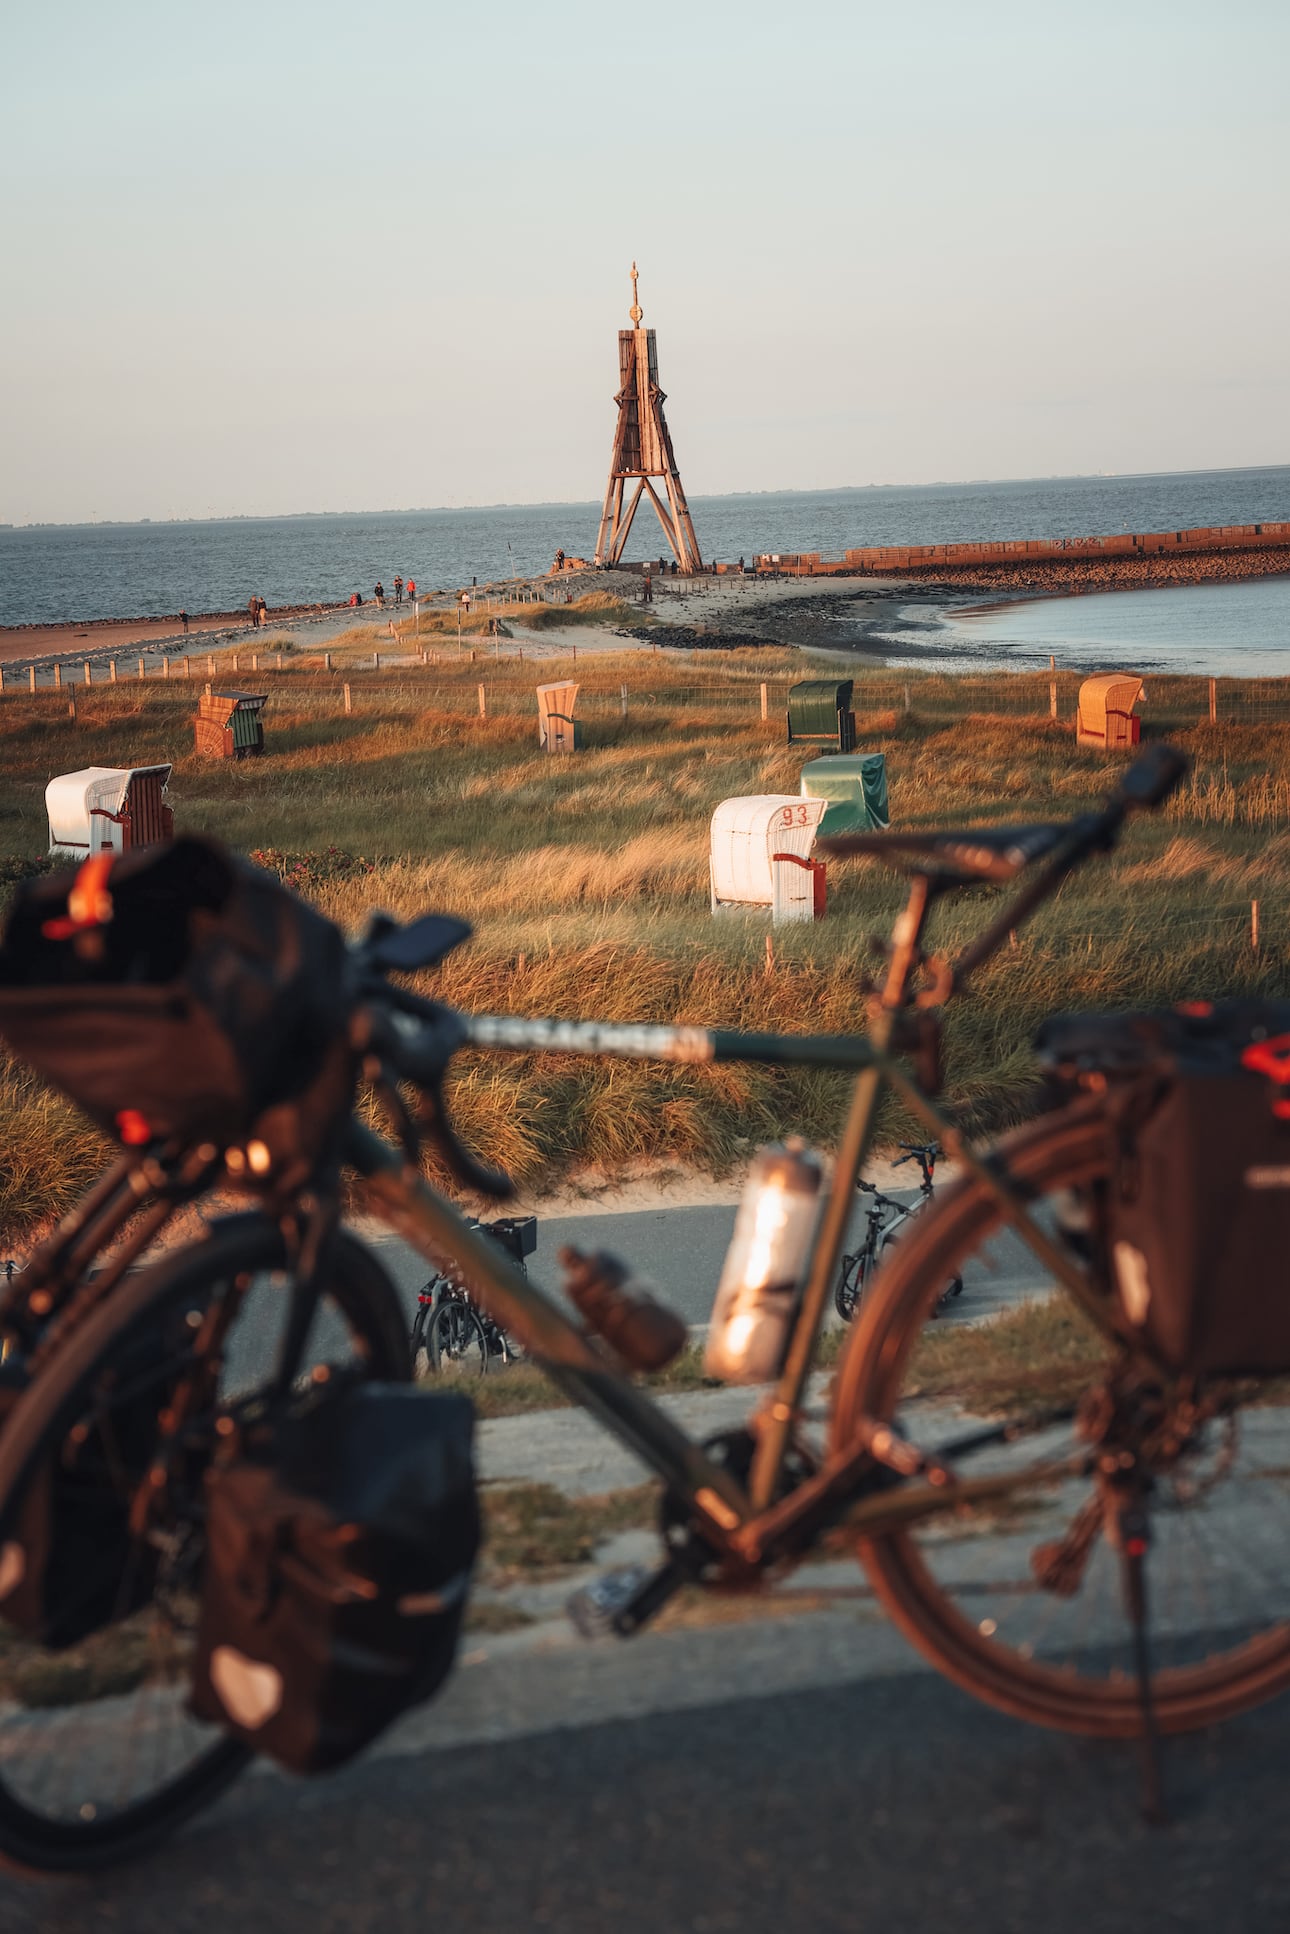 Kugelbake in Cuxhaven am Ende des Weserradwegs